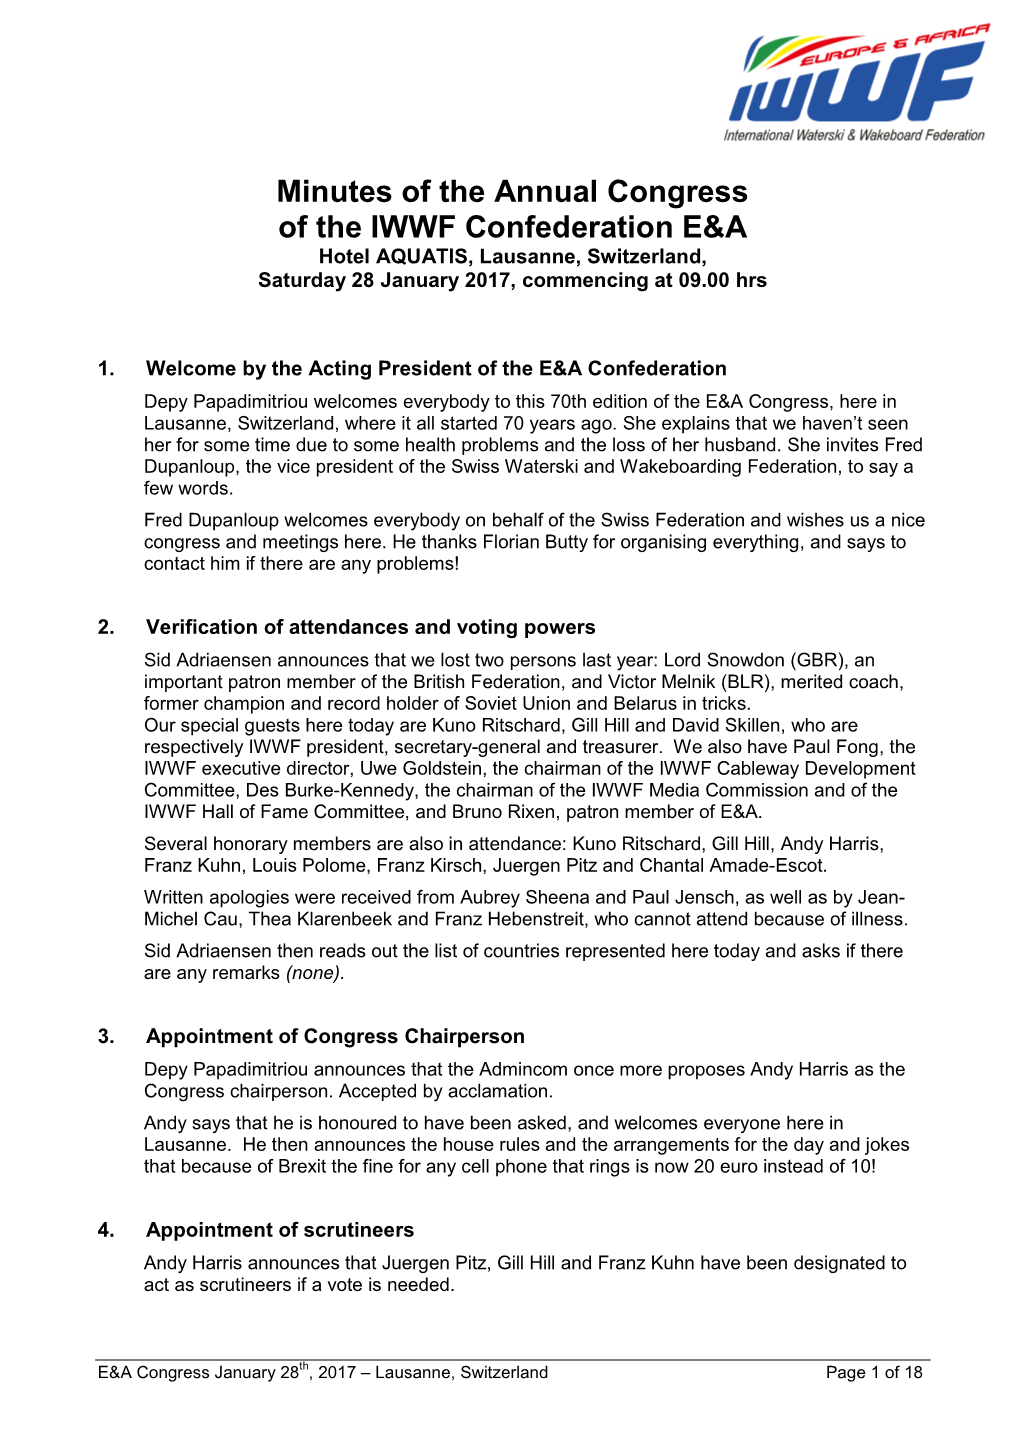 Minutes of the Annual Congress of the IWWF Confederation E&A